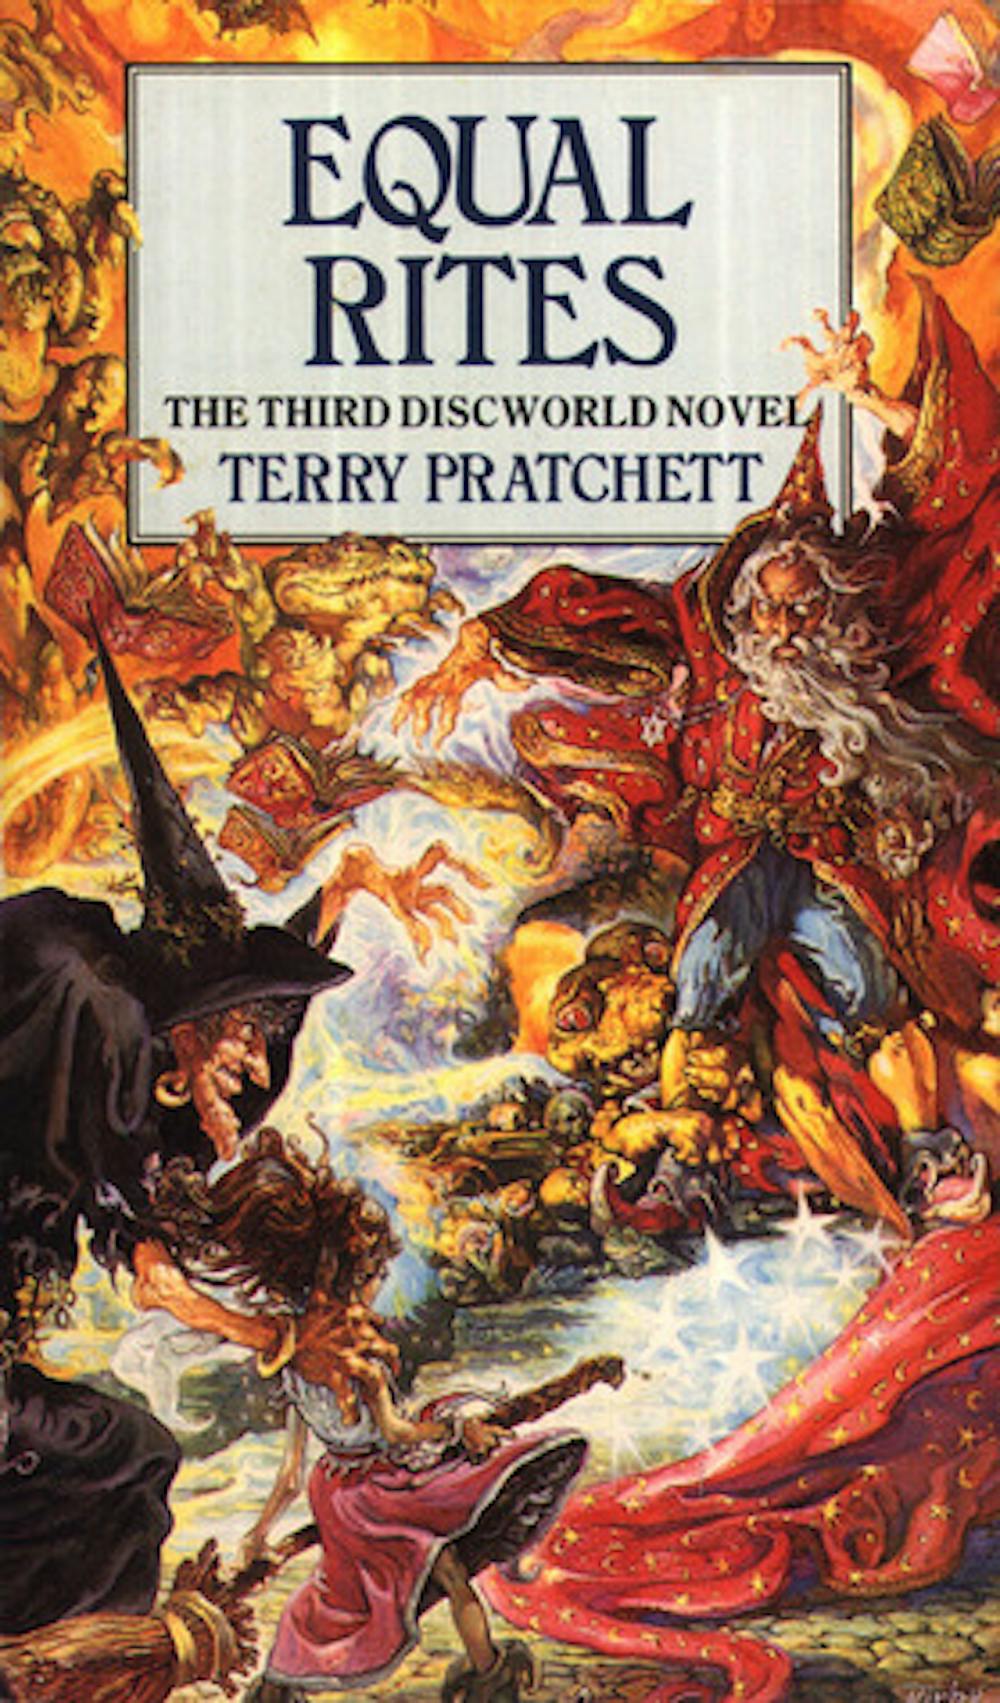 A beginner's guide to Terry Pratchett's Discworld